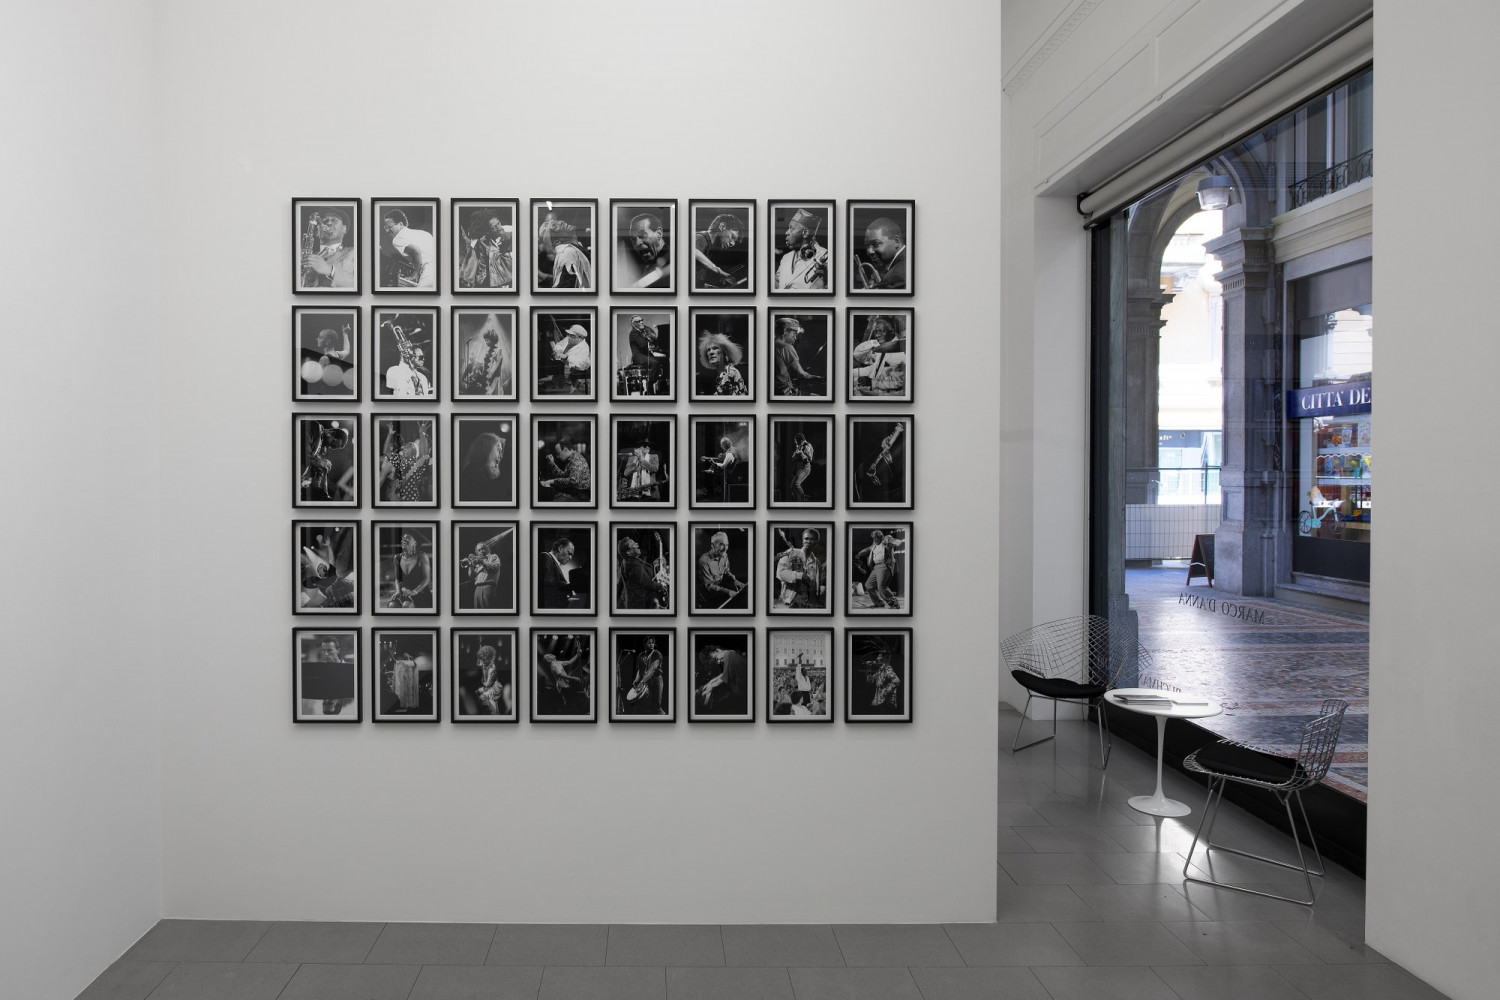 Marco D'Anna, Installation view, Buchmann Lugano, 2019